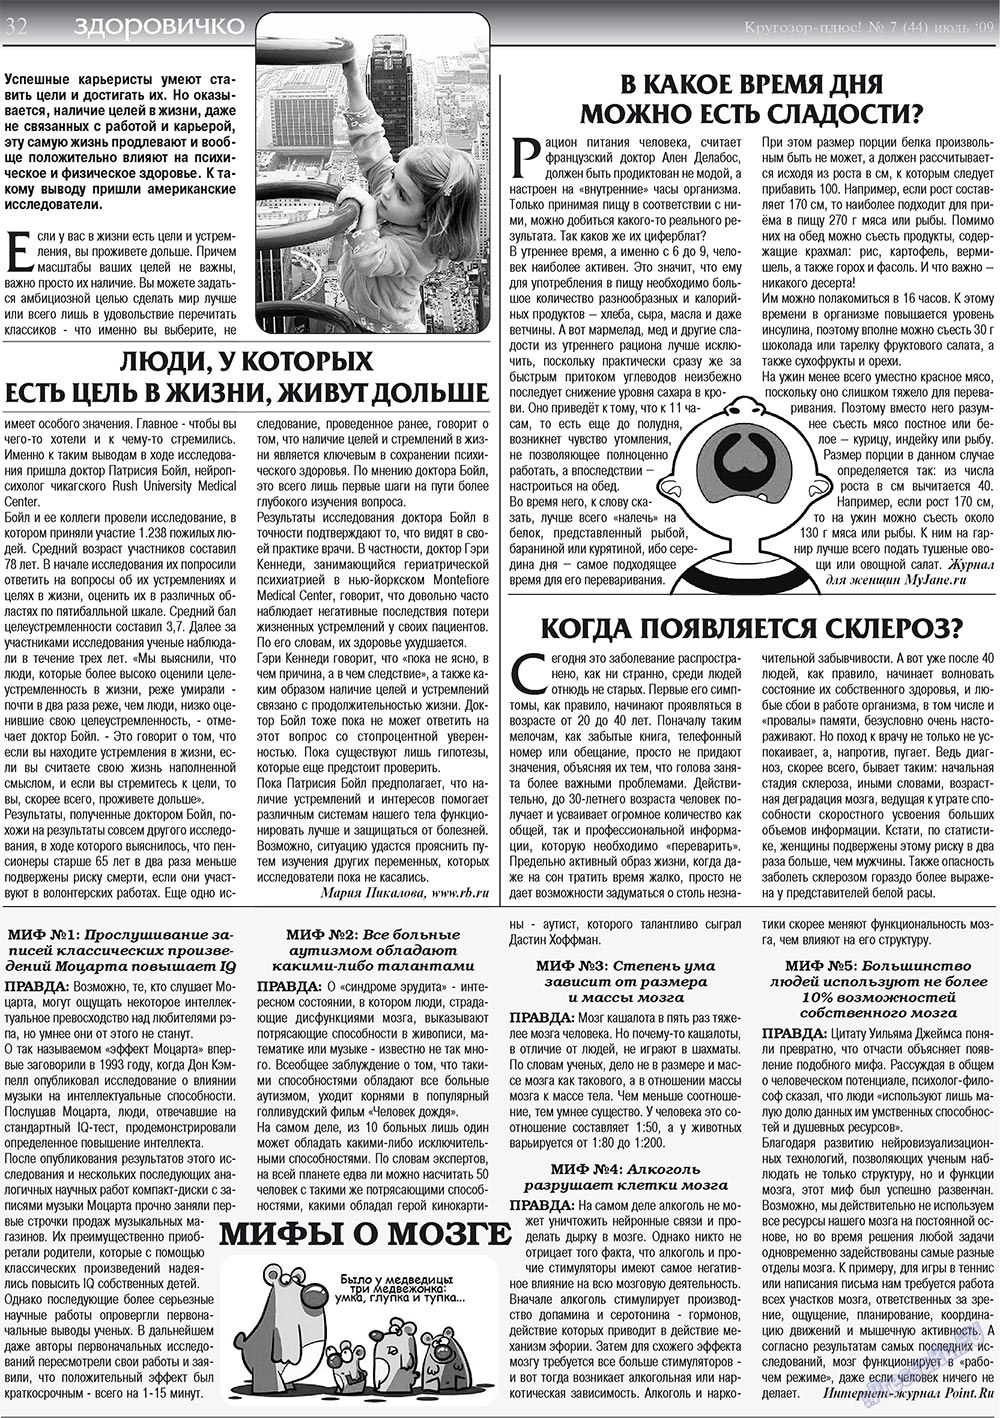 Кругозор плюс! (газета). 2009 год, номер 7, стр. 32